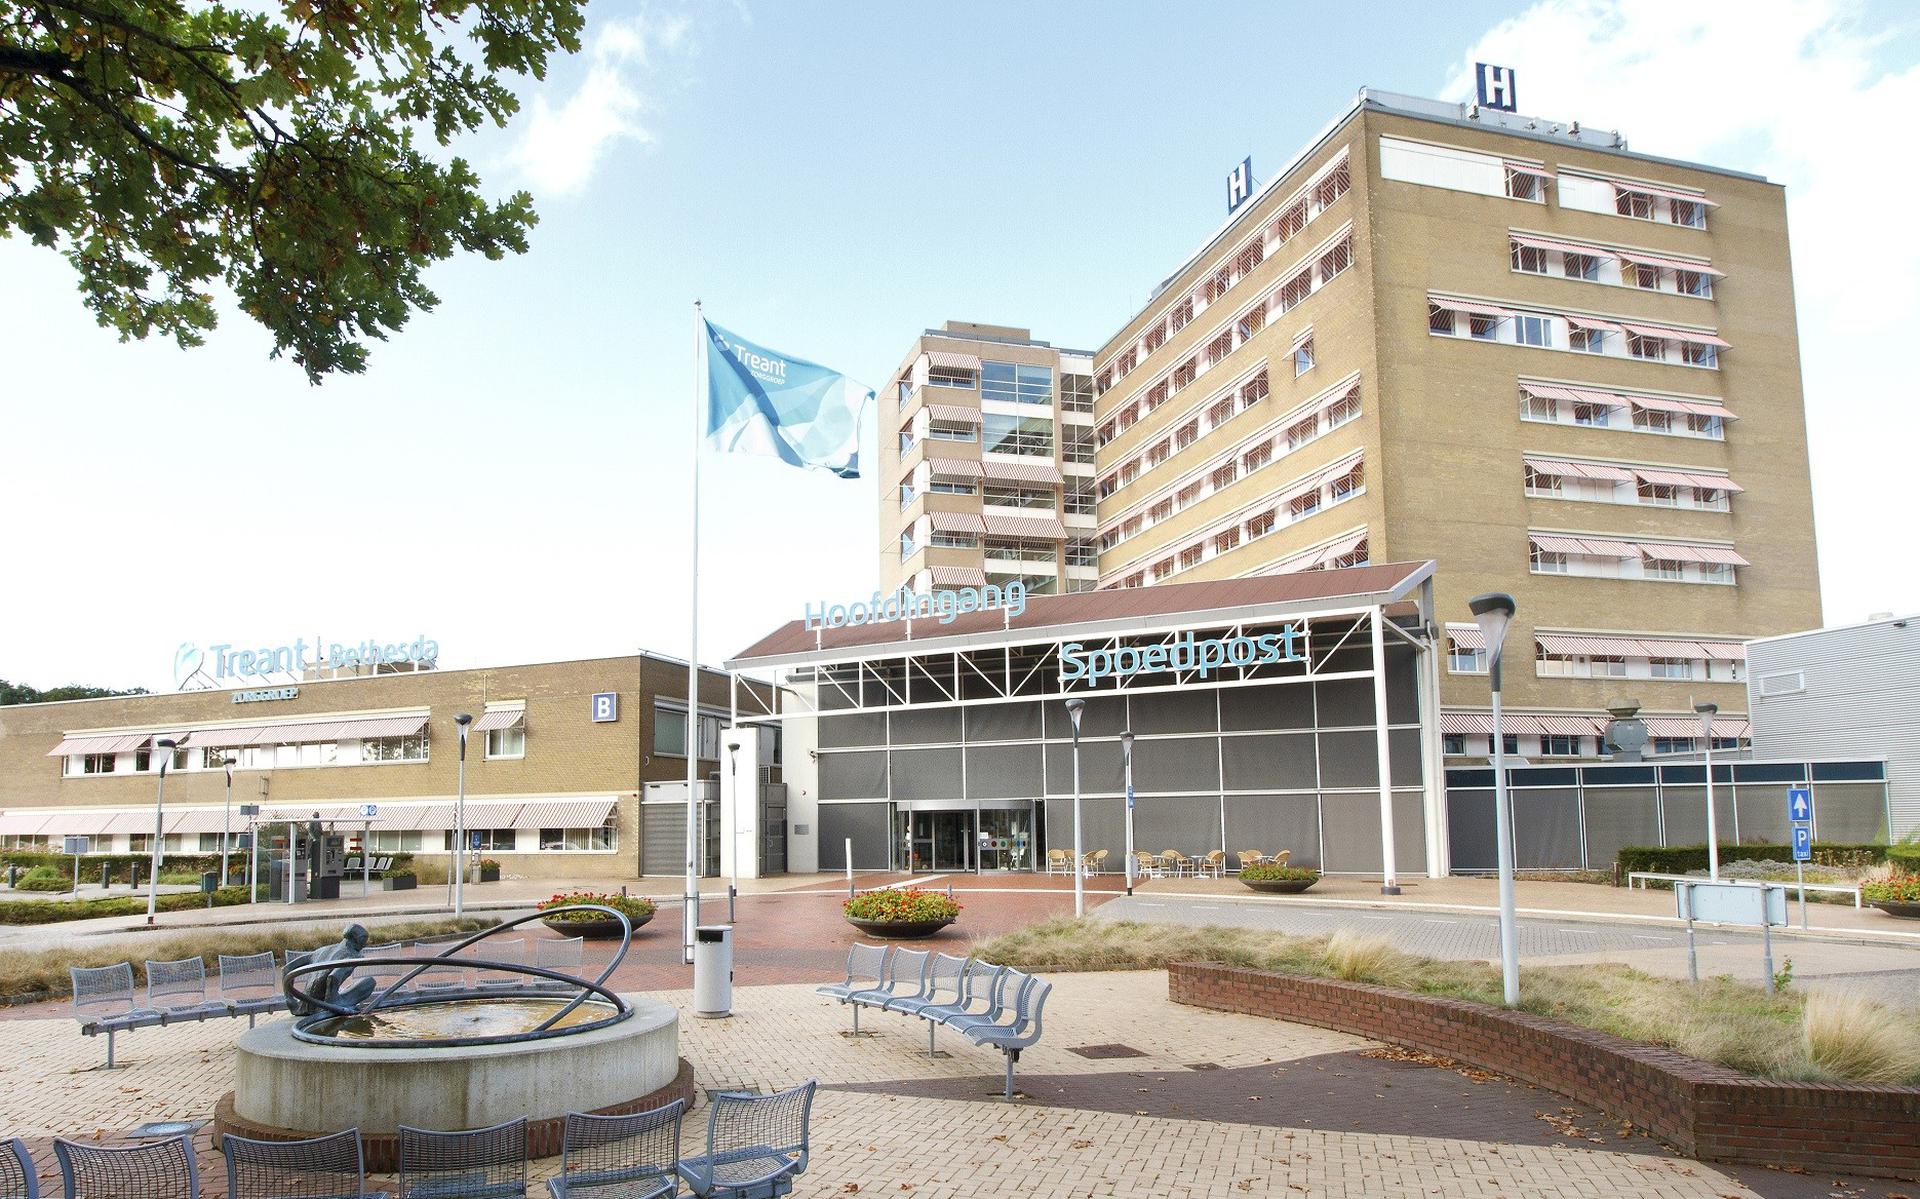 Bethesda Hospital Hoogeveen - TBR Solutions